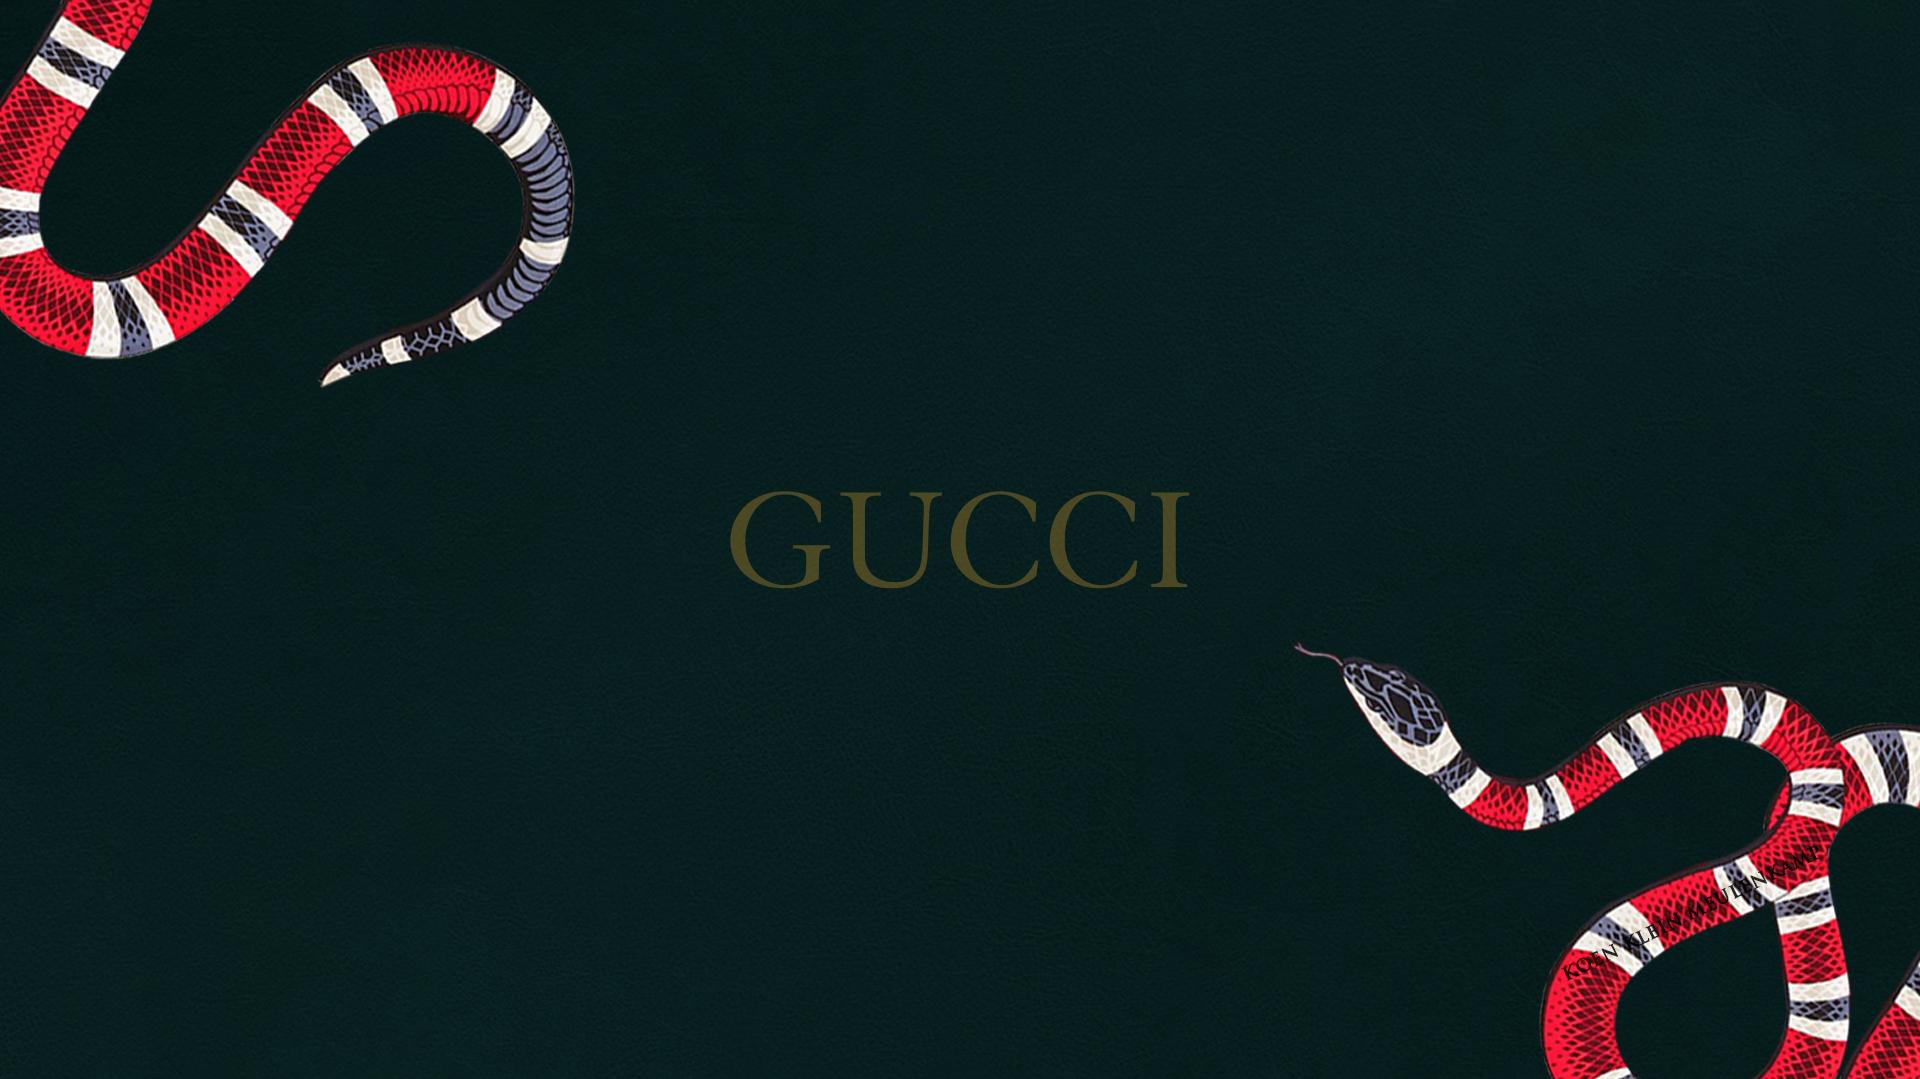 Gucci Snake Wallpaper For Your Desktop